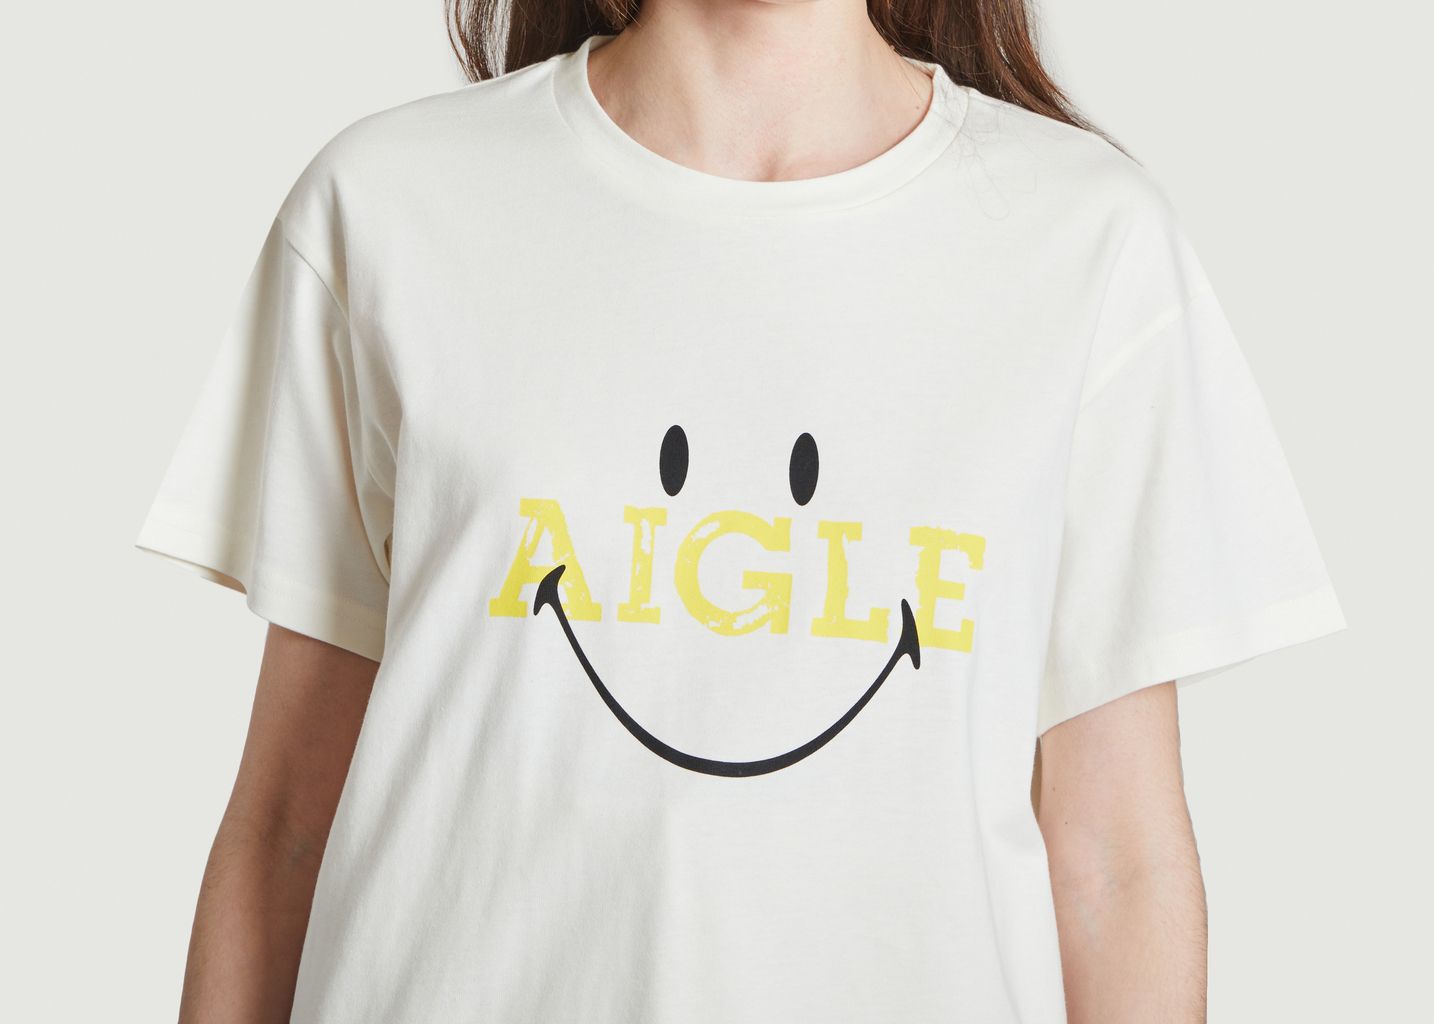 Eagle x Smiley T-shirt - Aigle